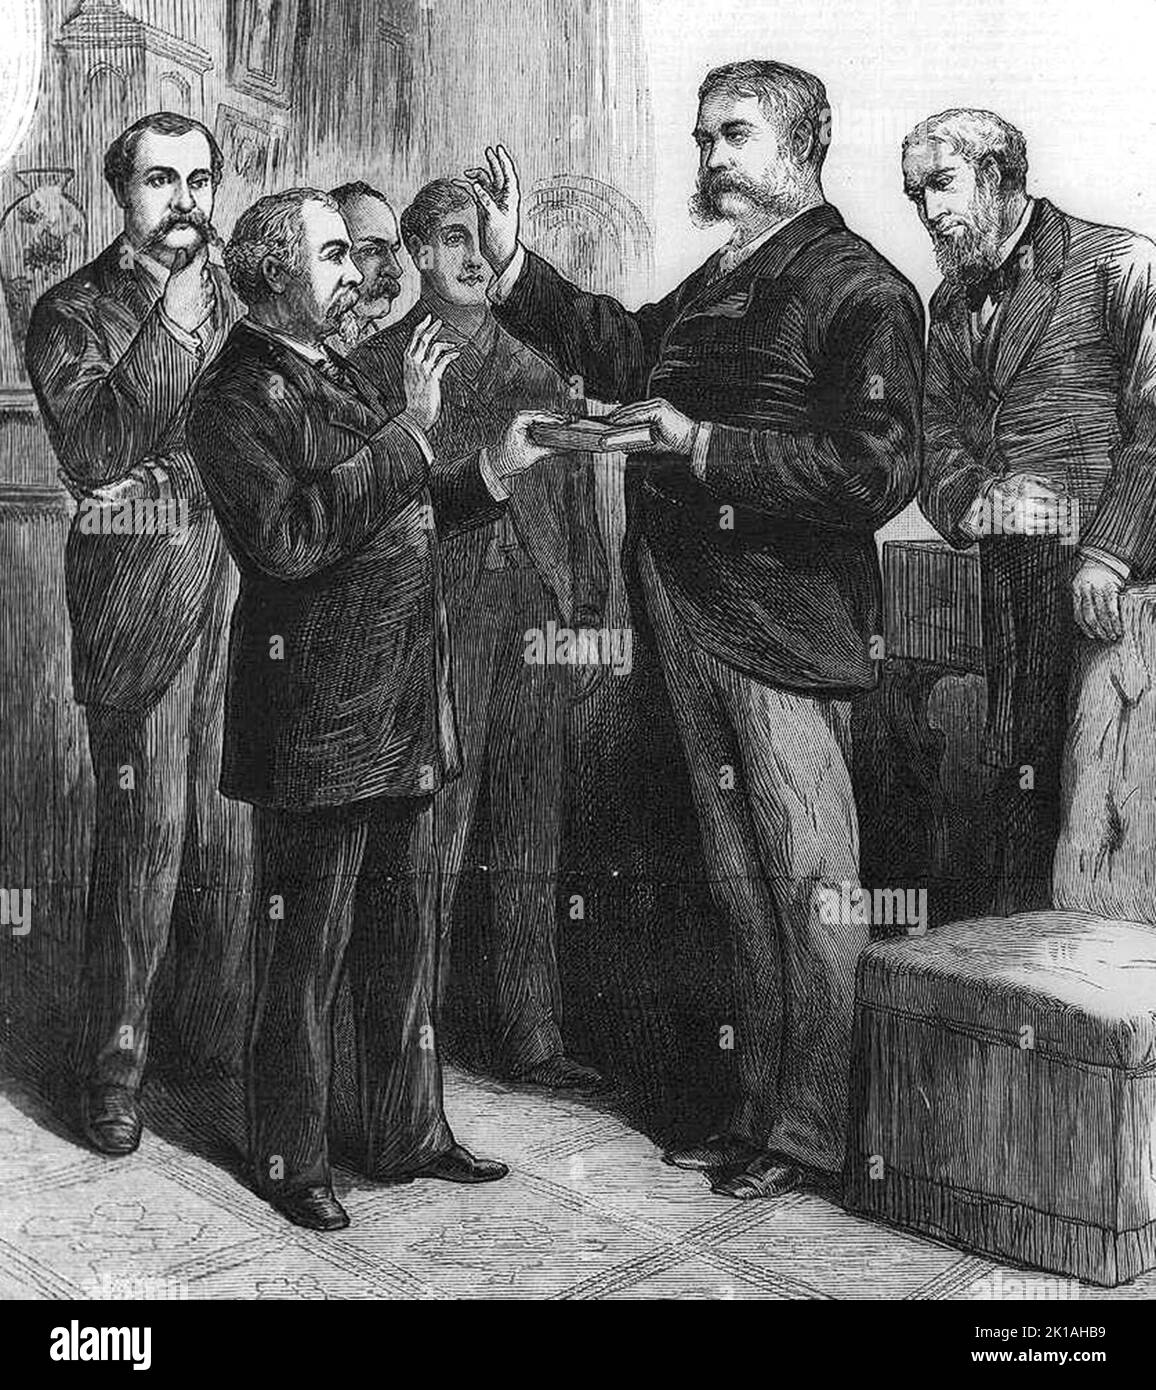 Arthur, der den Amtseid von Richter John R. Brady in Arthur's Haus in New York City abgelegt hat, 20. September 1881 Stockfoto